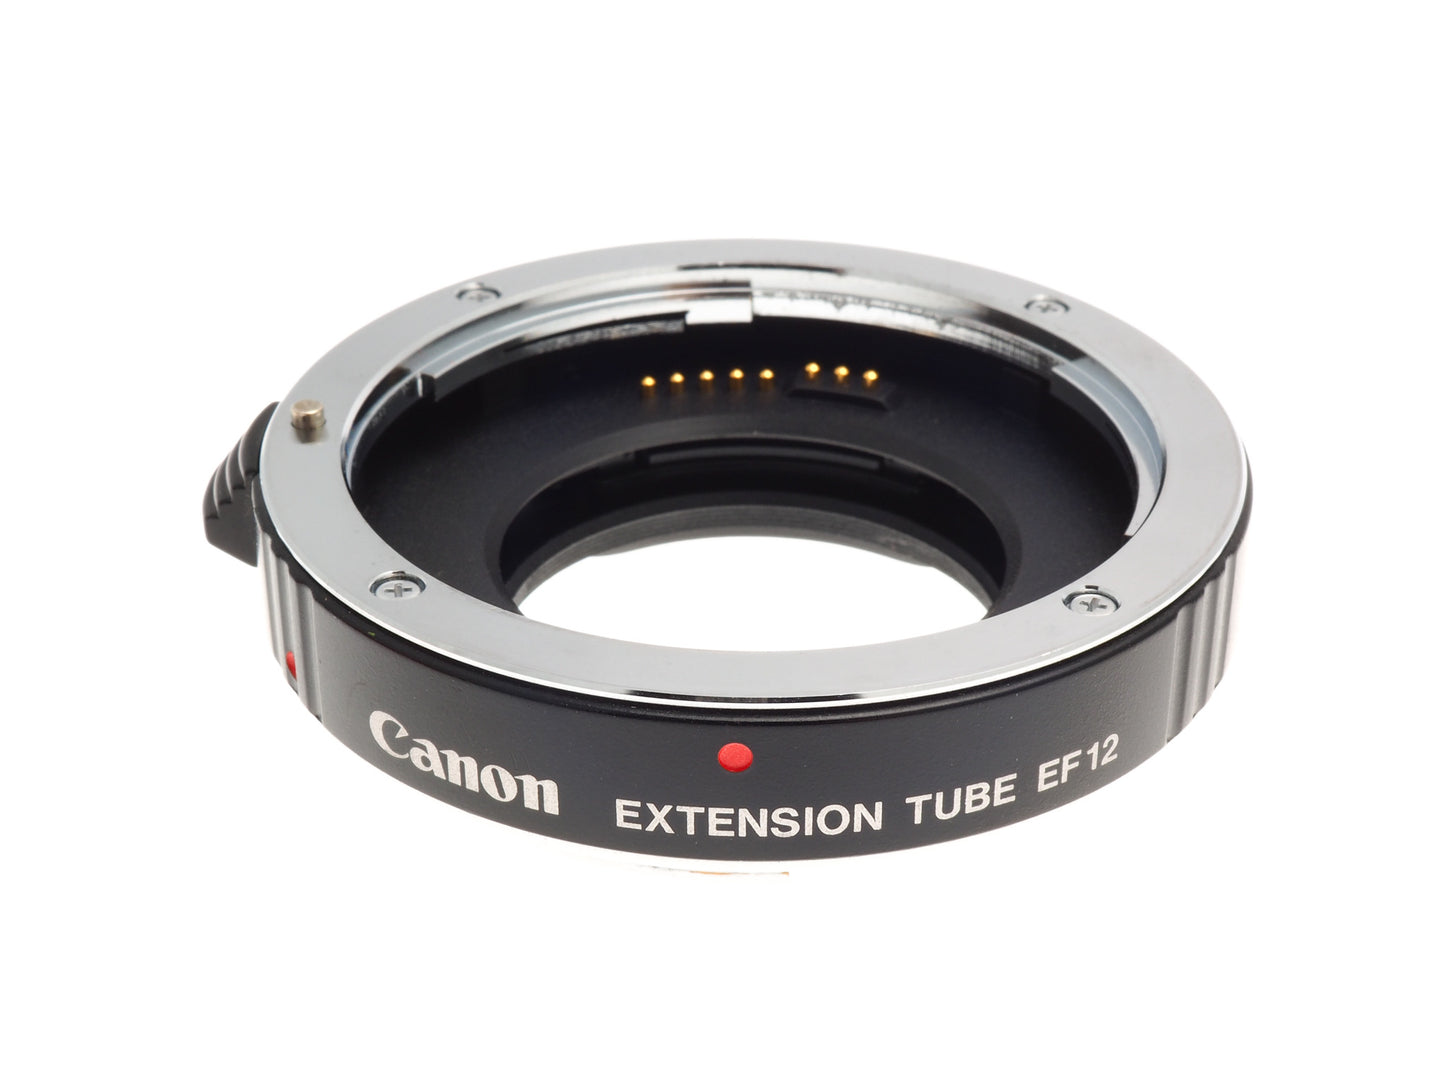 Canon Extension Tube EF12 - Accessory